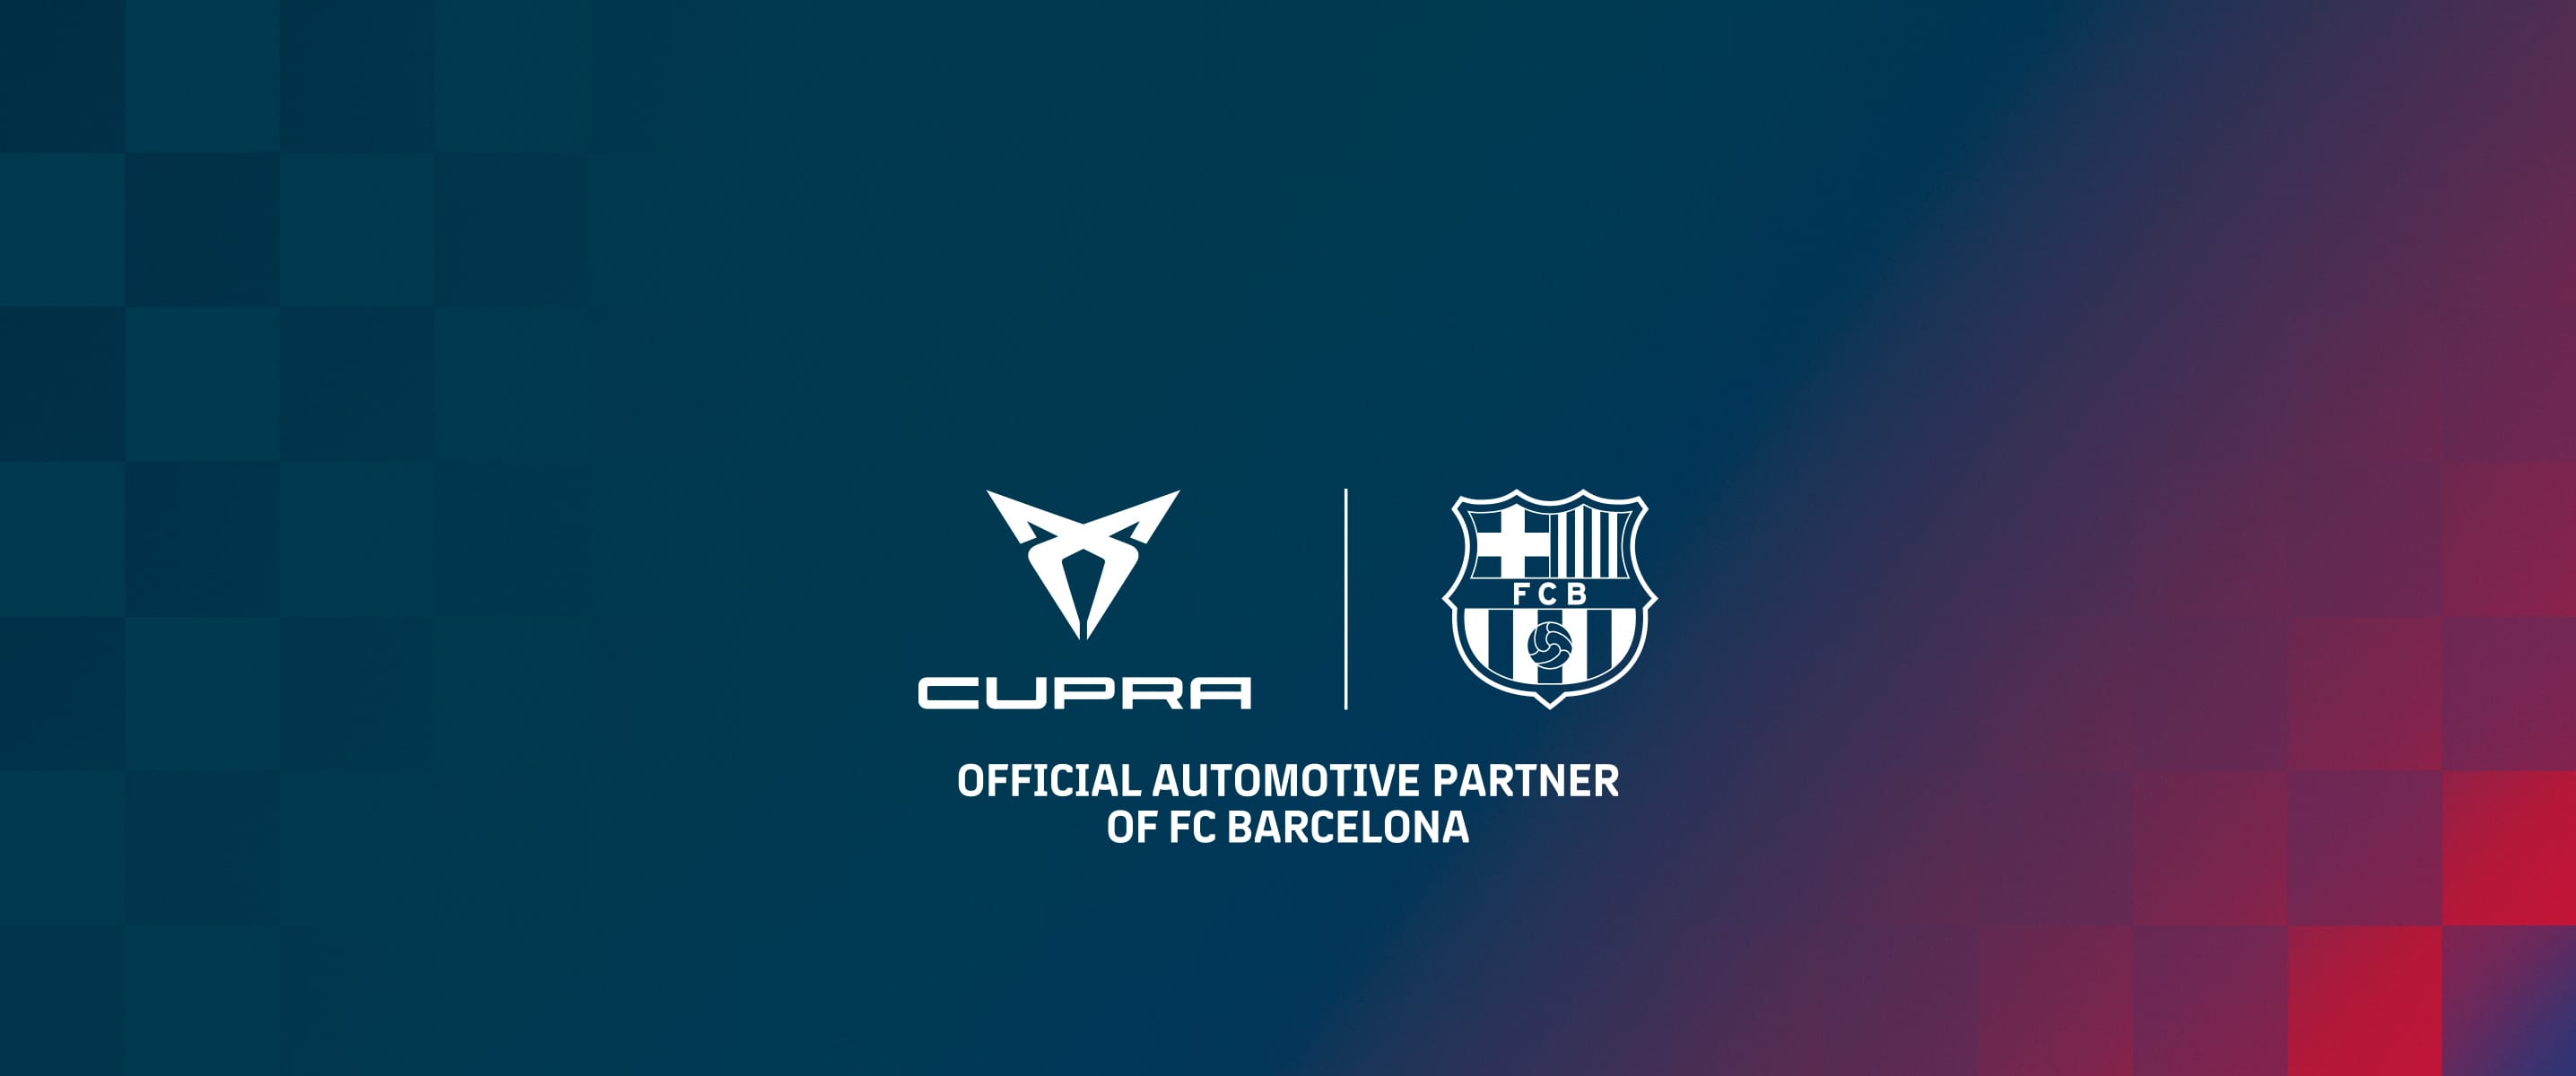 Le partenariat CUPRA et FC Barcelone